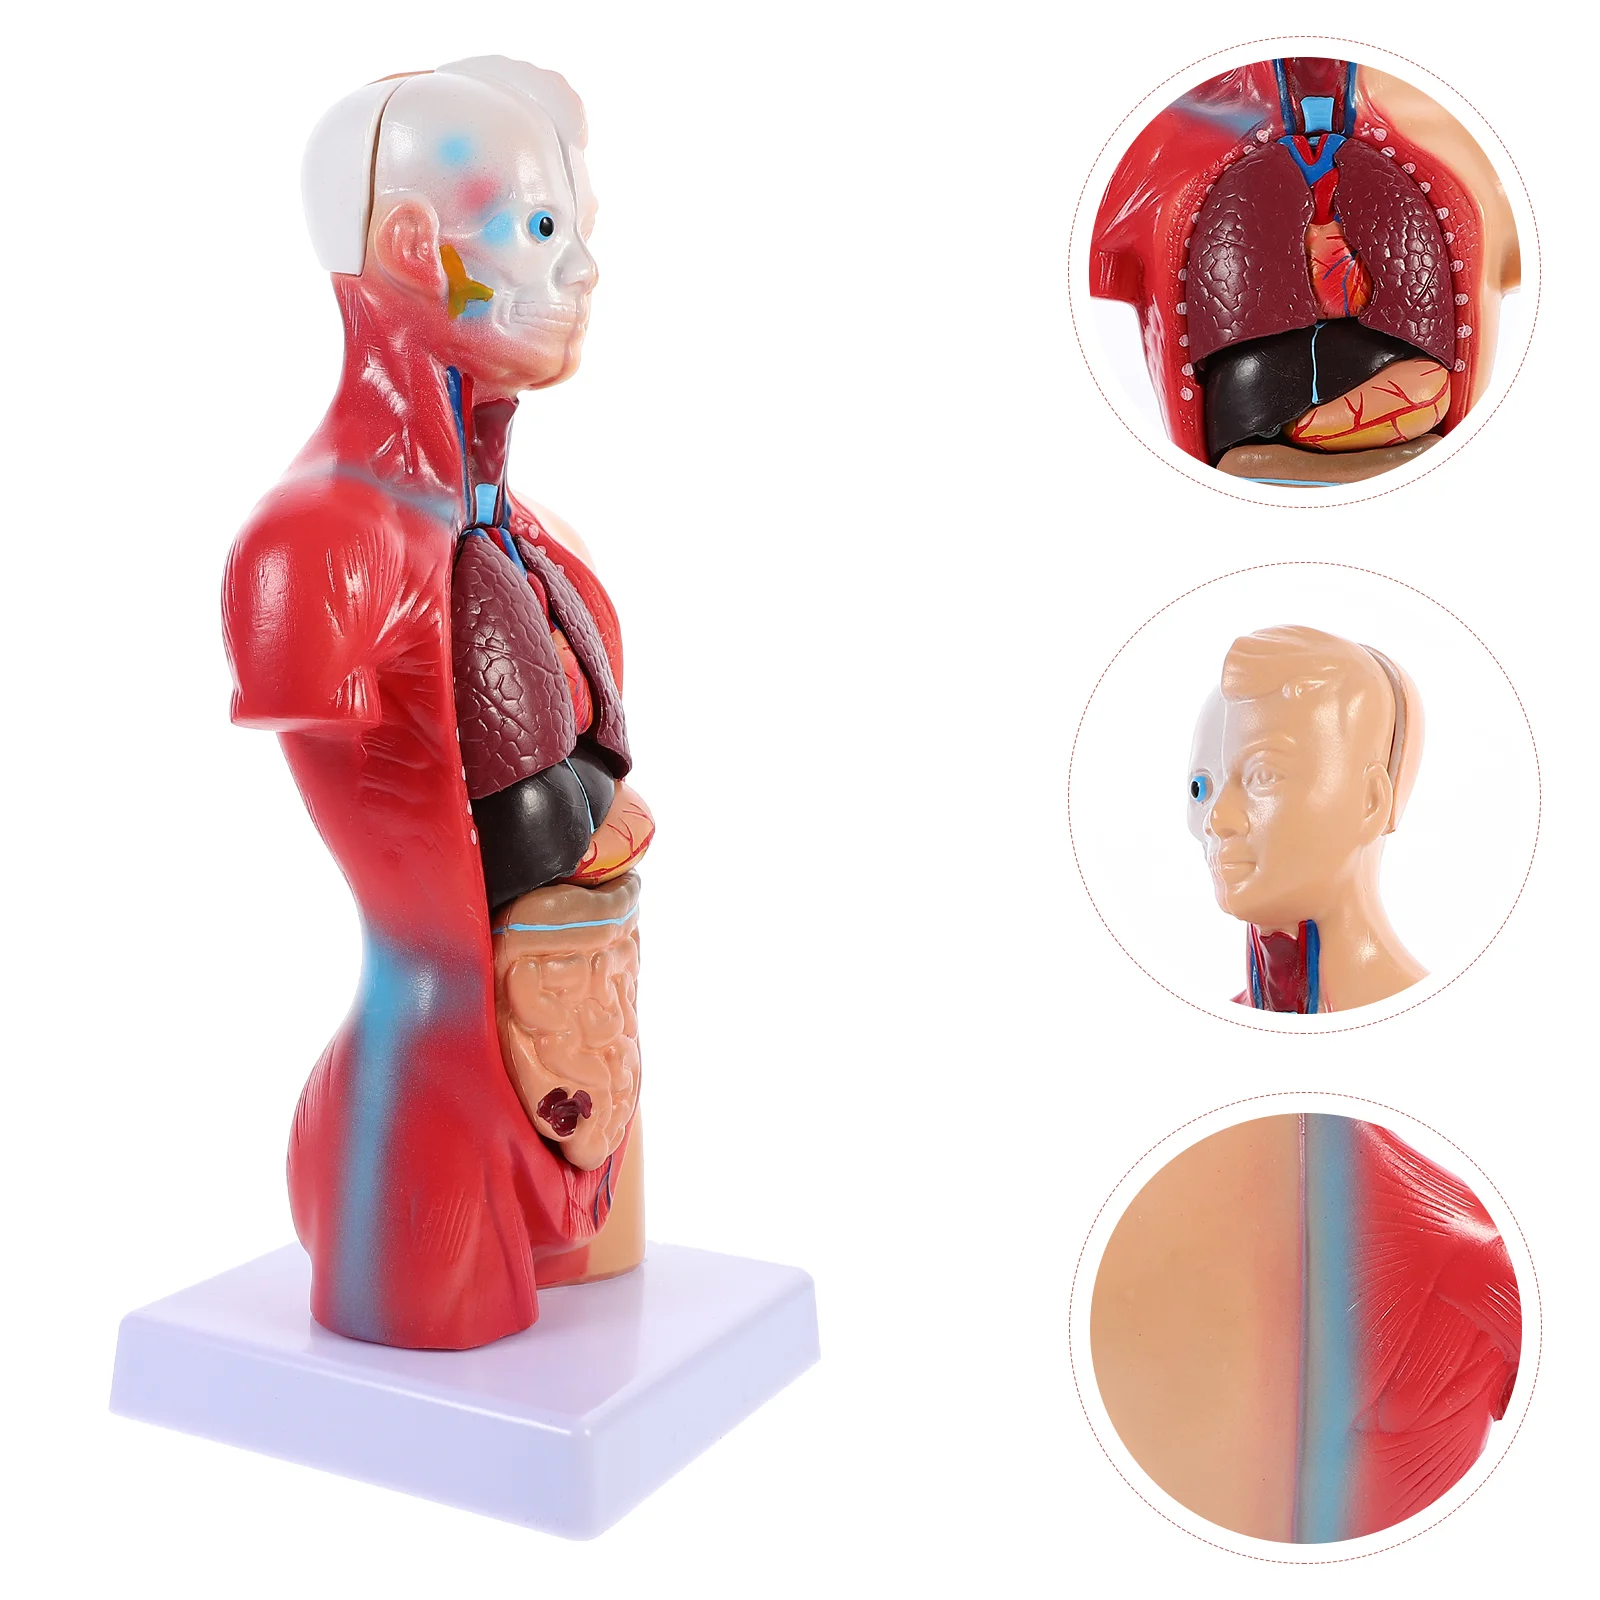 

Mannequin Kids Toys School Educational Tool Teaching Anatomy Torso Model Human Body Organs Pvc Child Anatomical